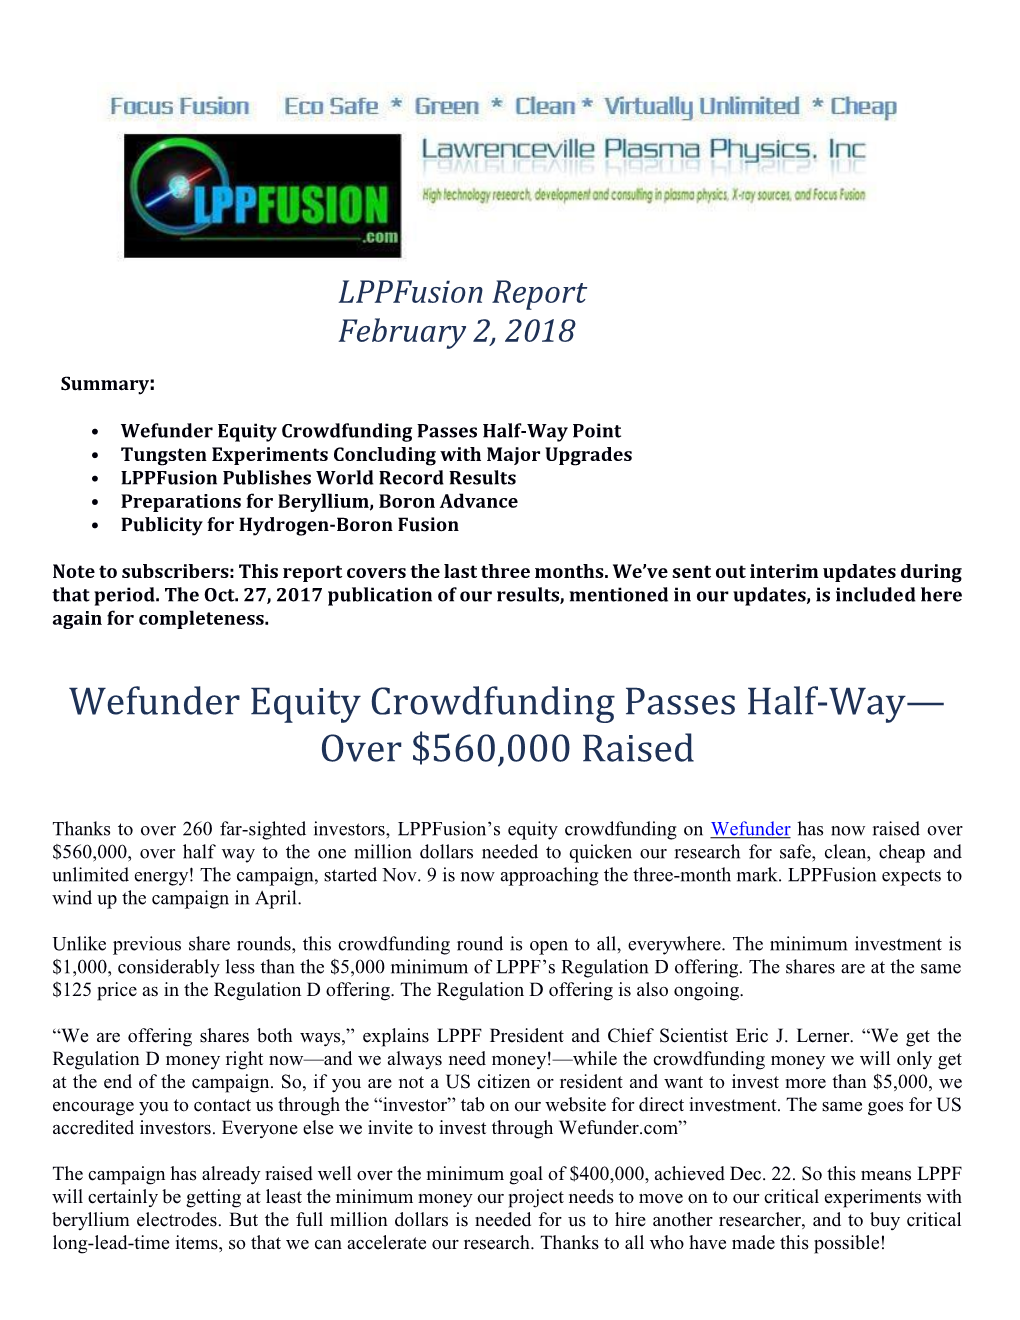 Wefunder Equity Crowdfunding Passes Half-Way